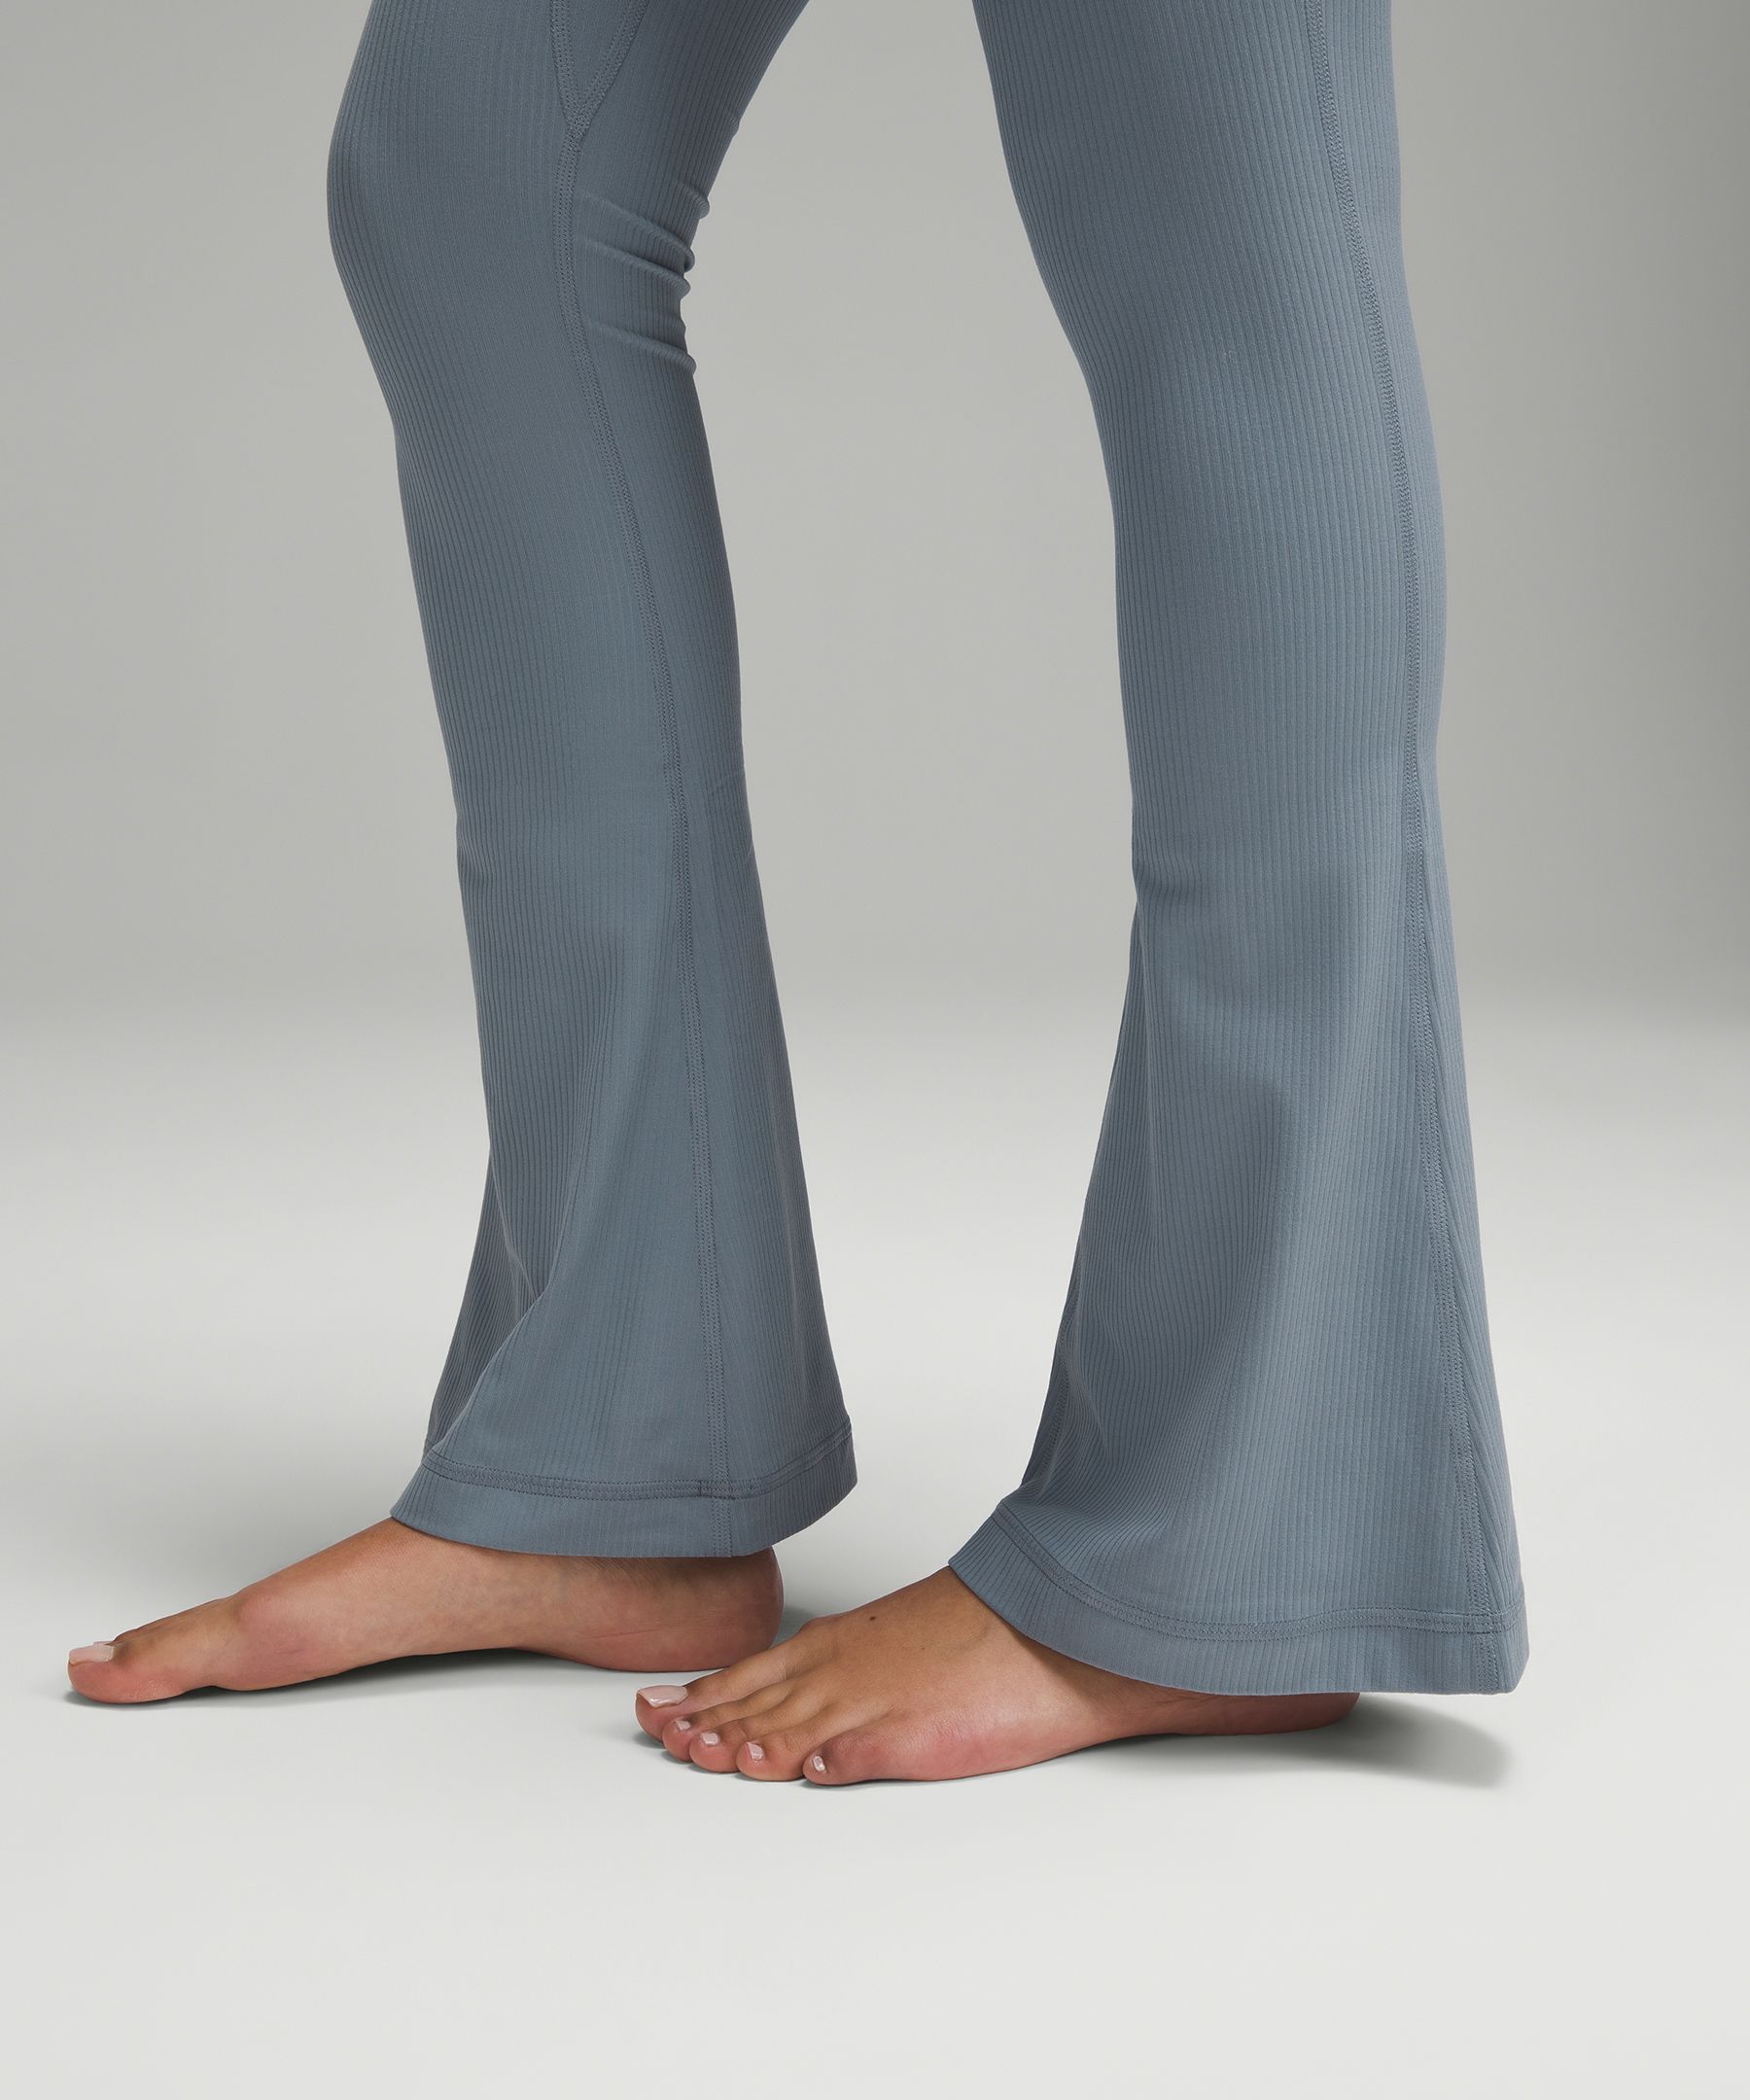 Lululemon High Rise Leggings 28” Gray Grey Thick Textured Knit